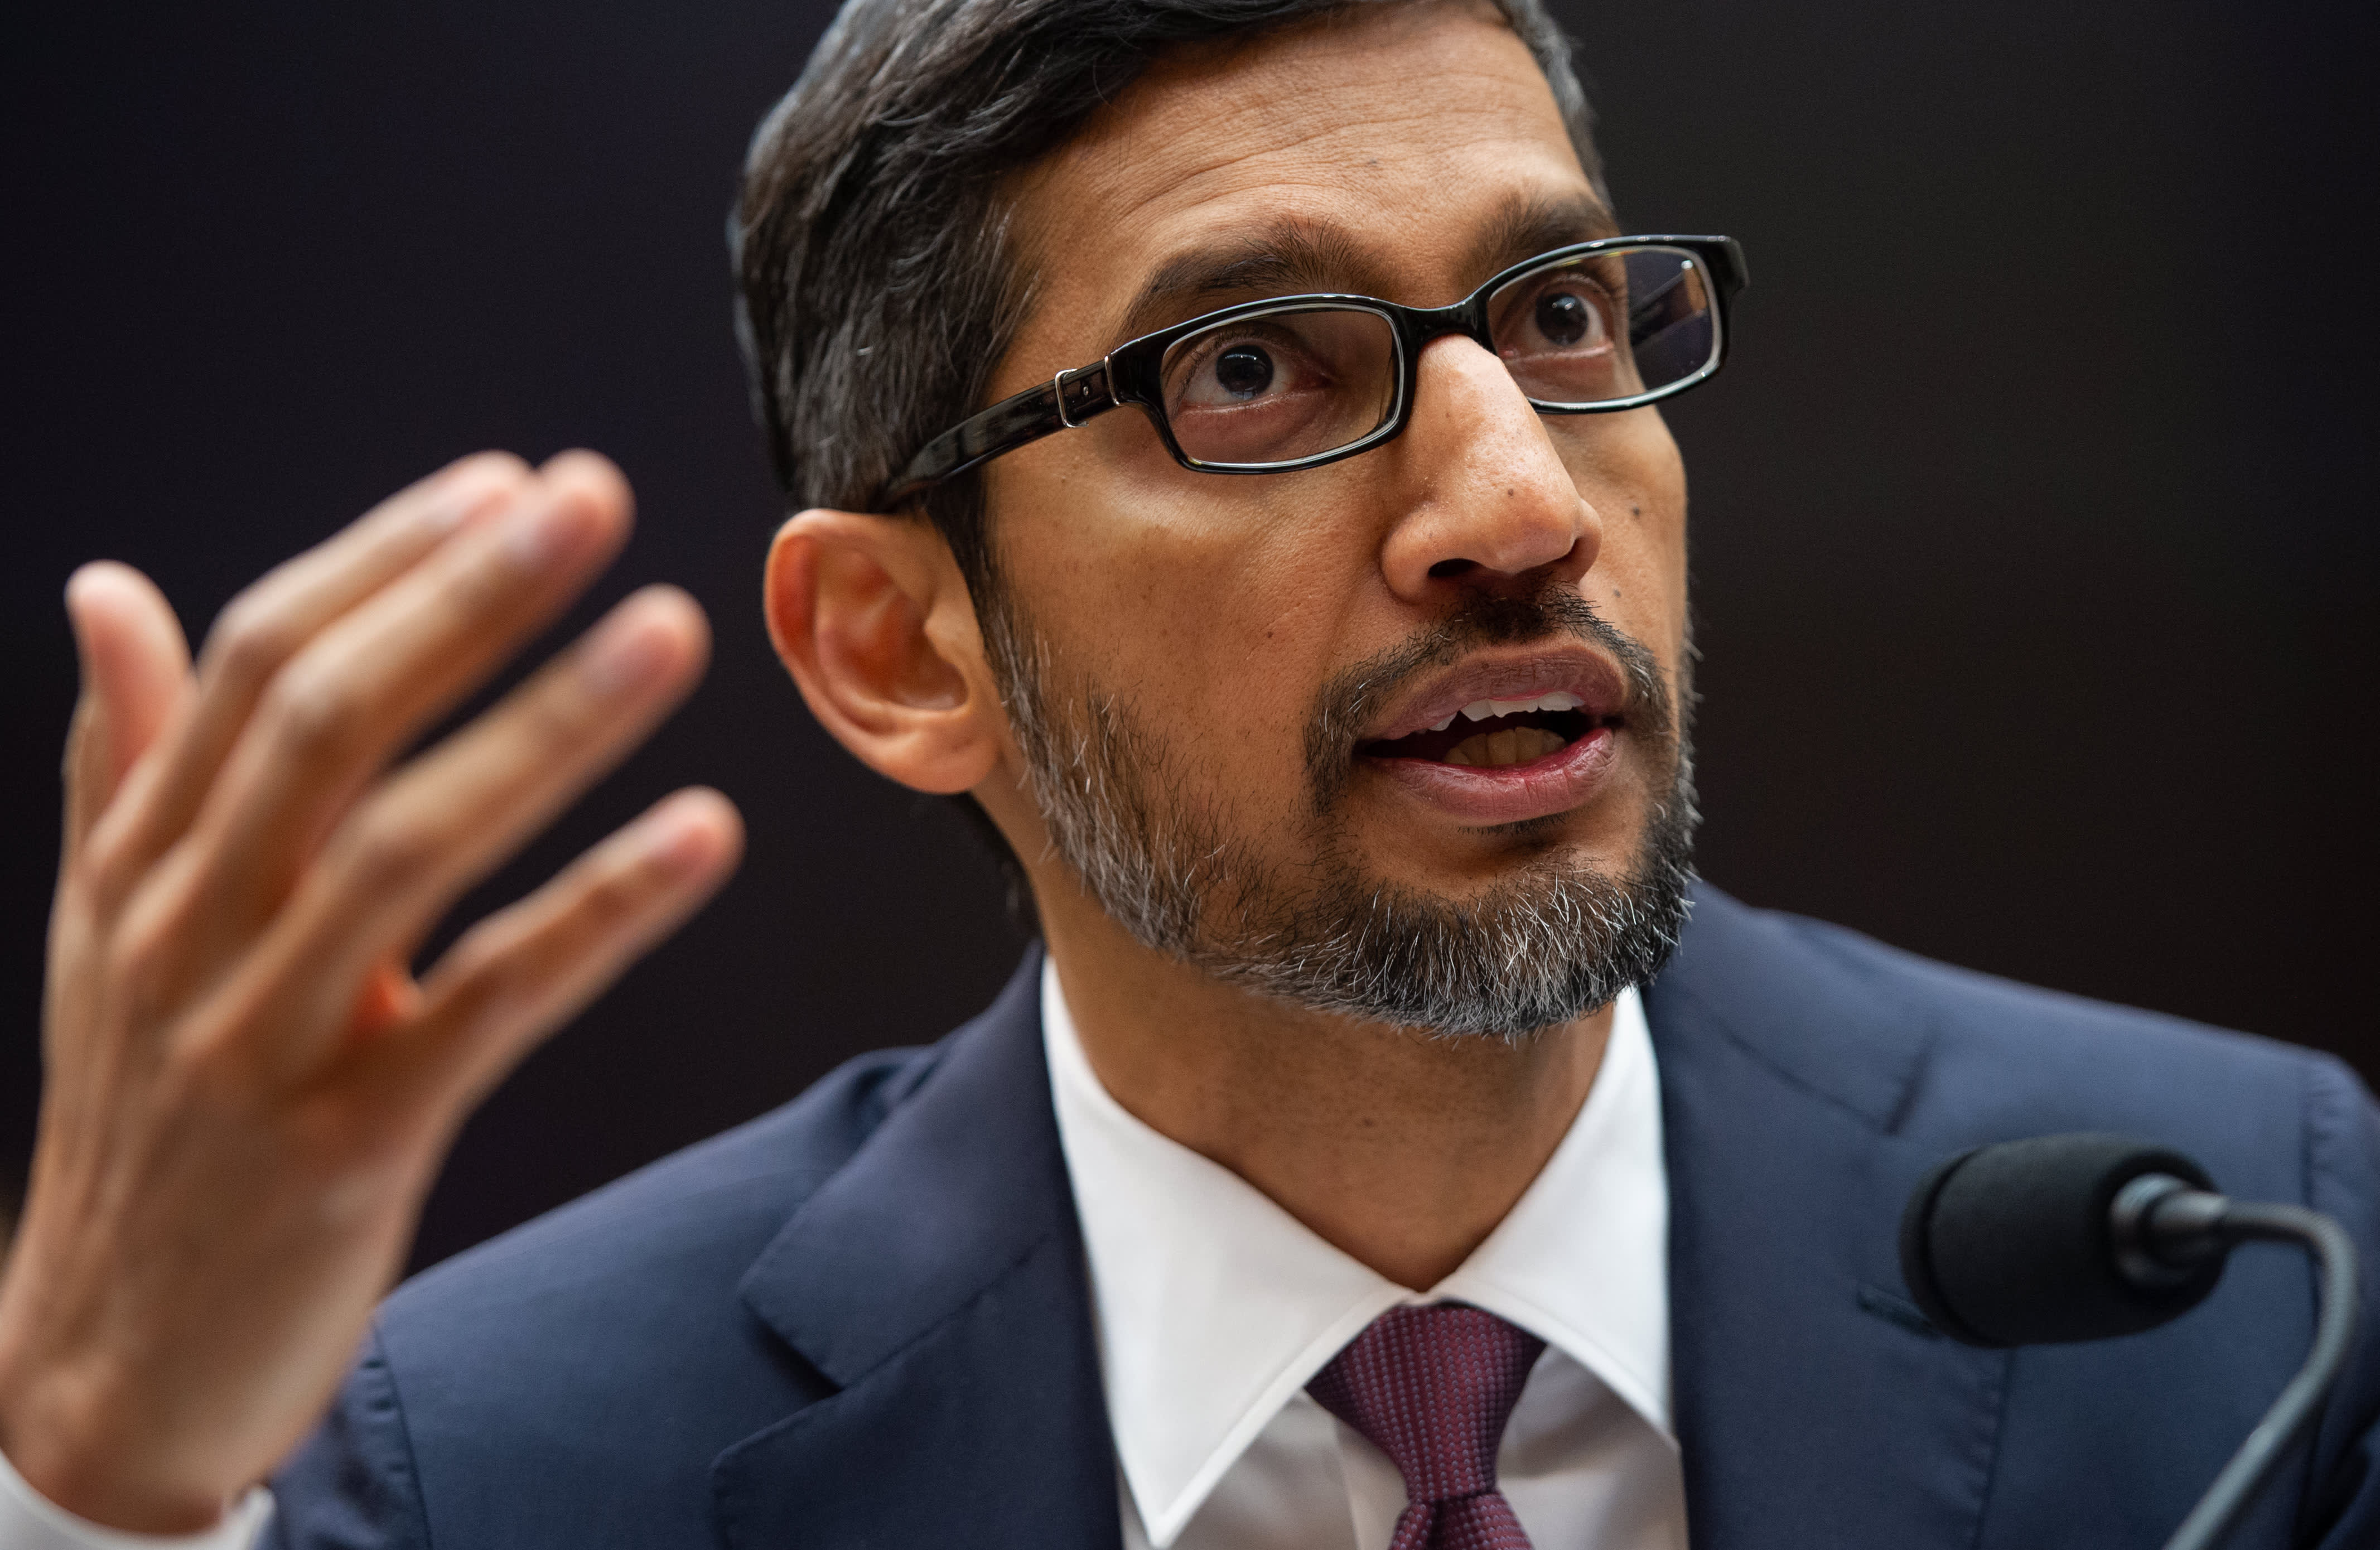 google ceo sundar pichai testifies before congress on bias, privacy